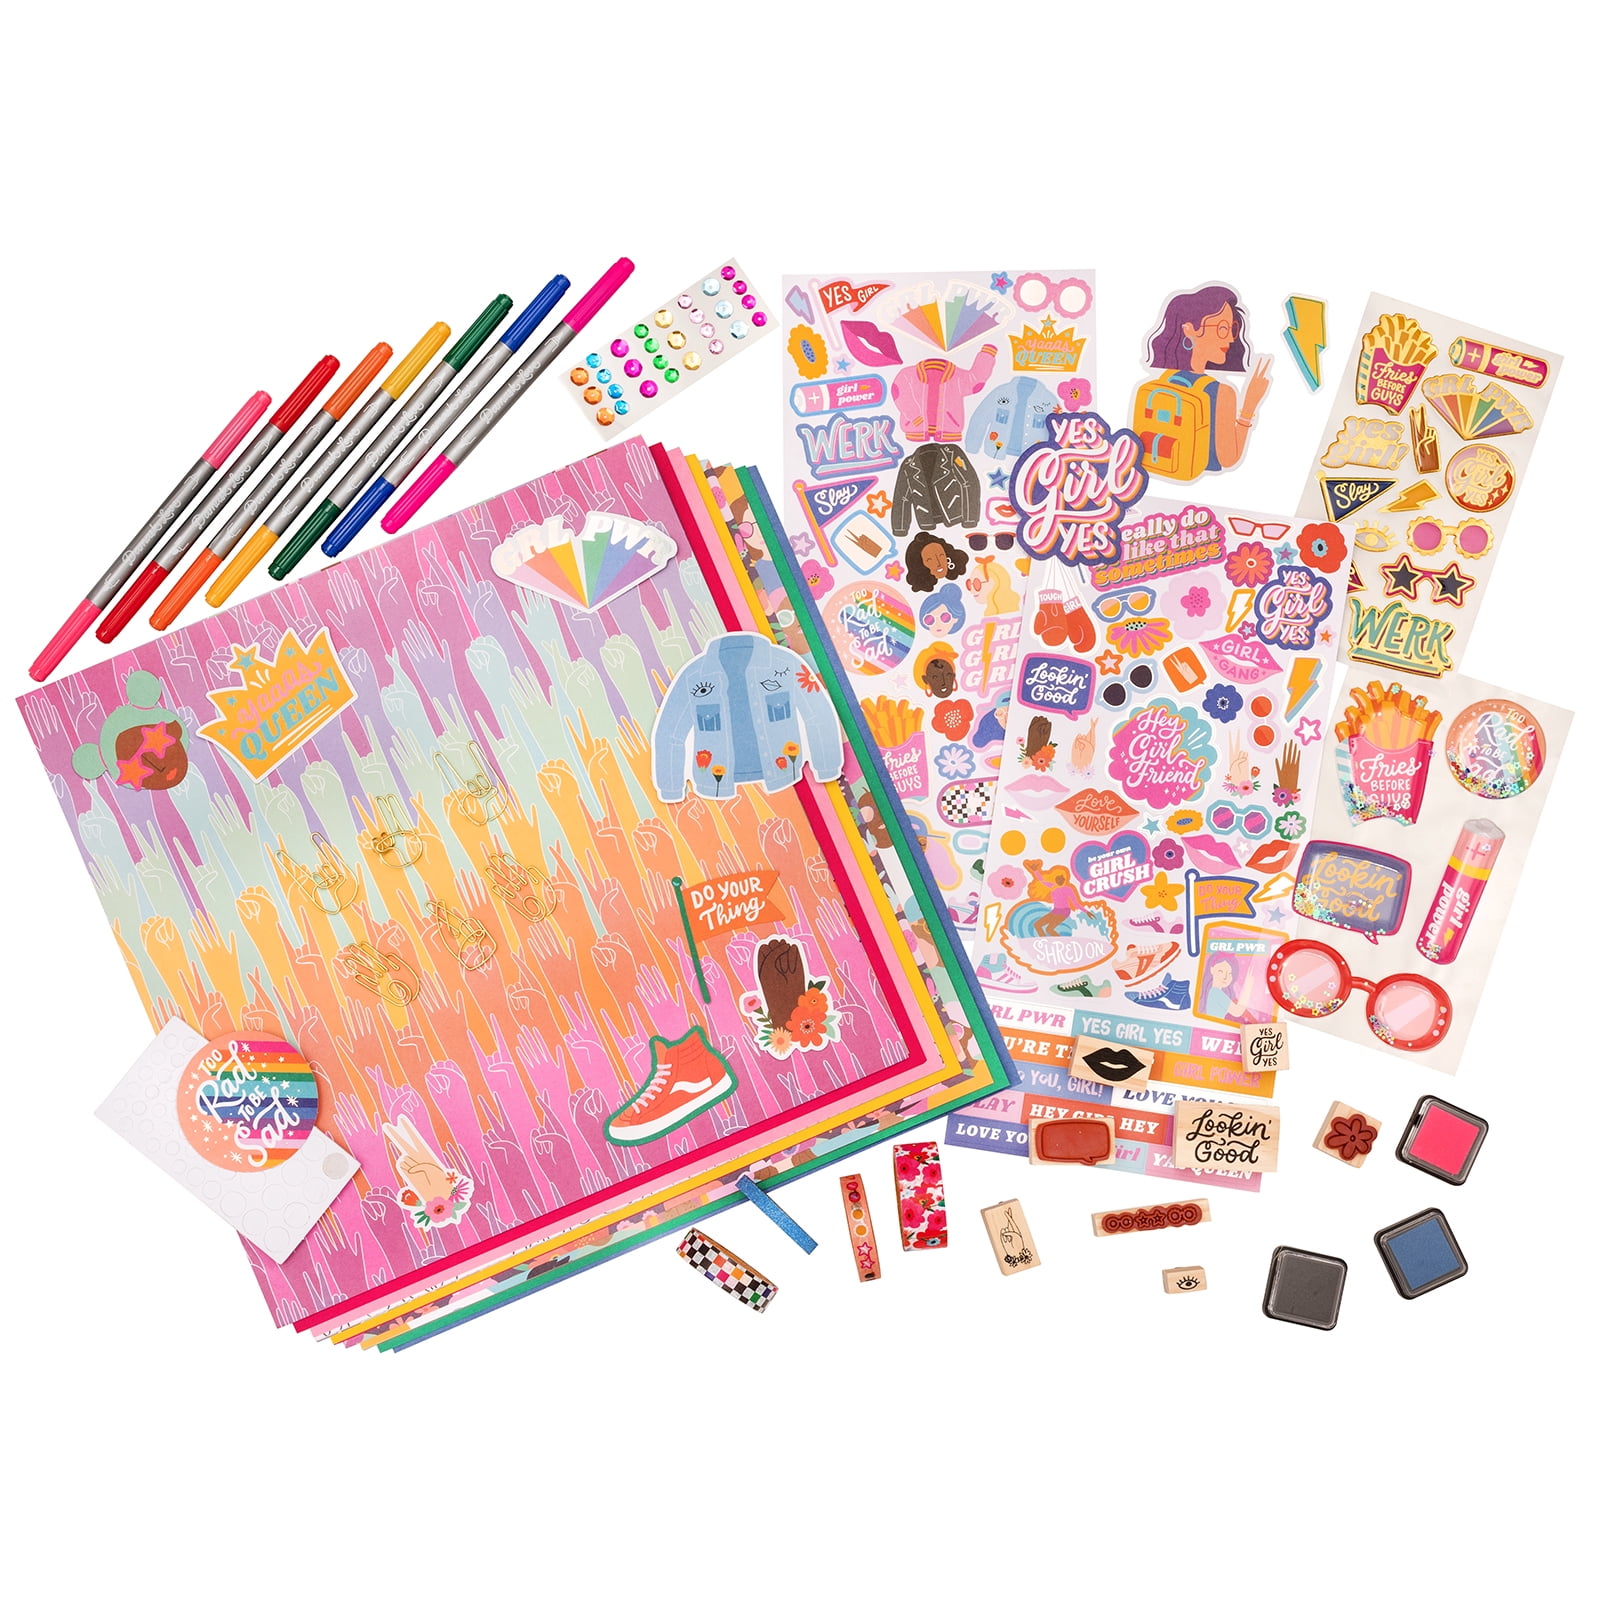 EpiqueOne 1500-Piece Craft Set for Kids – Arts & Crafts Kit for